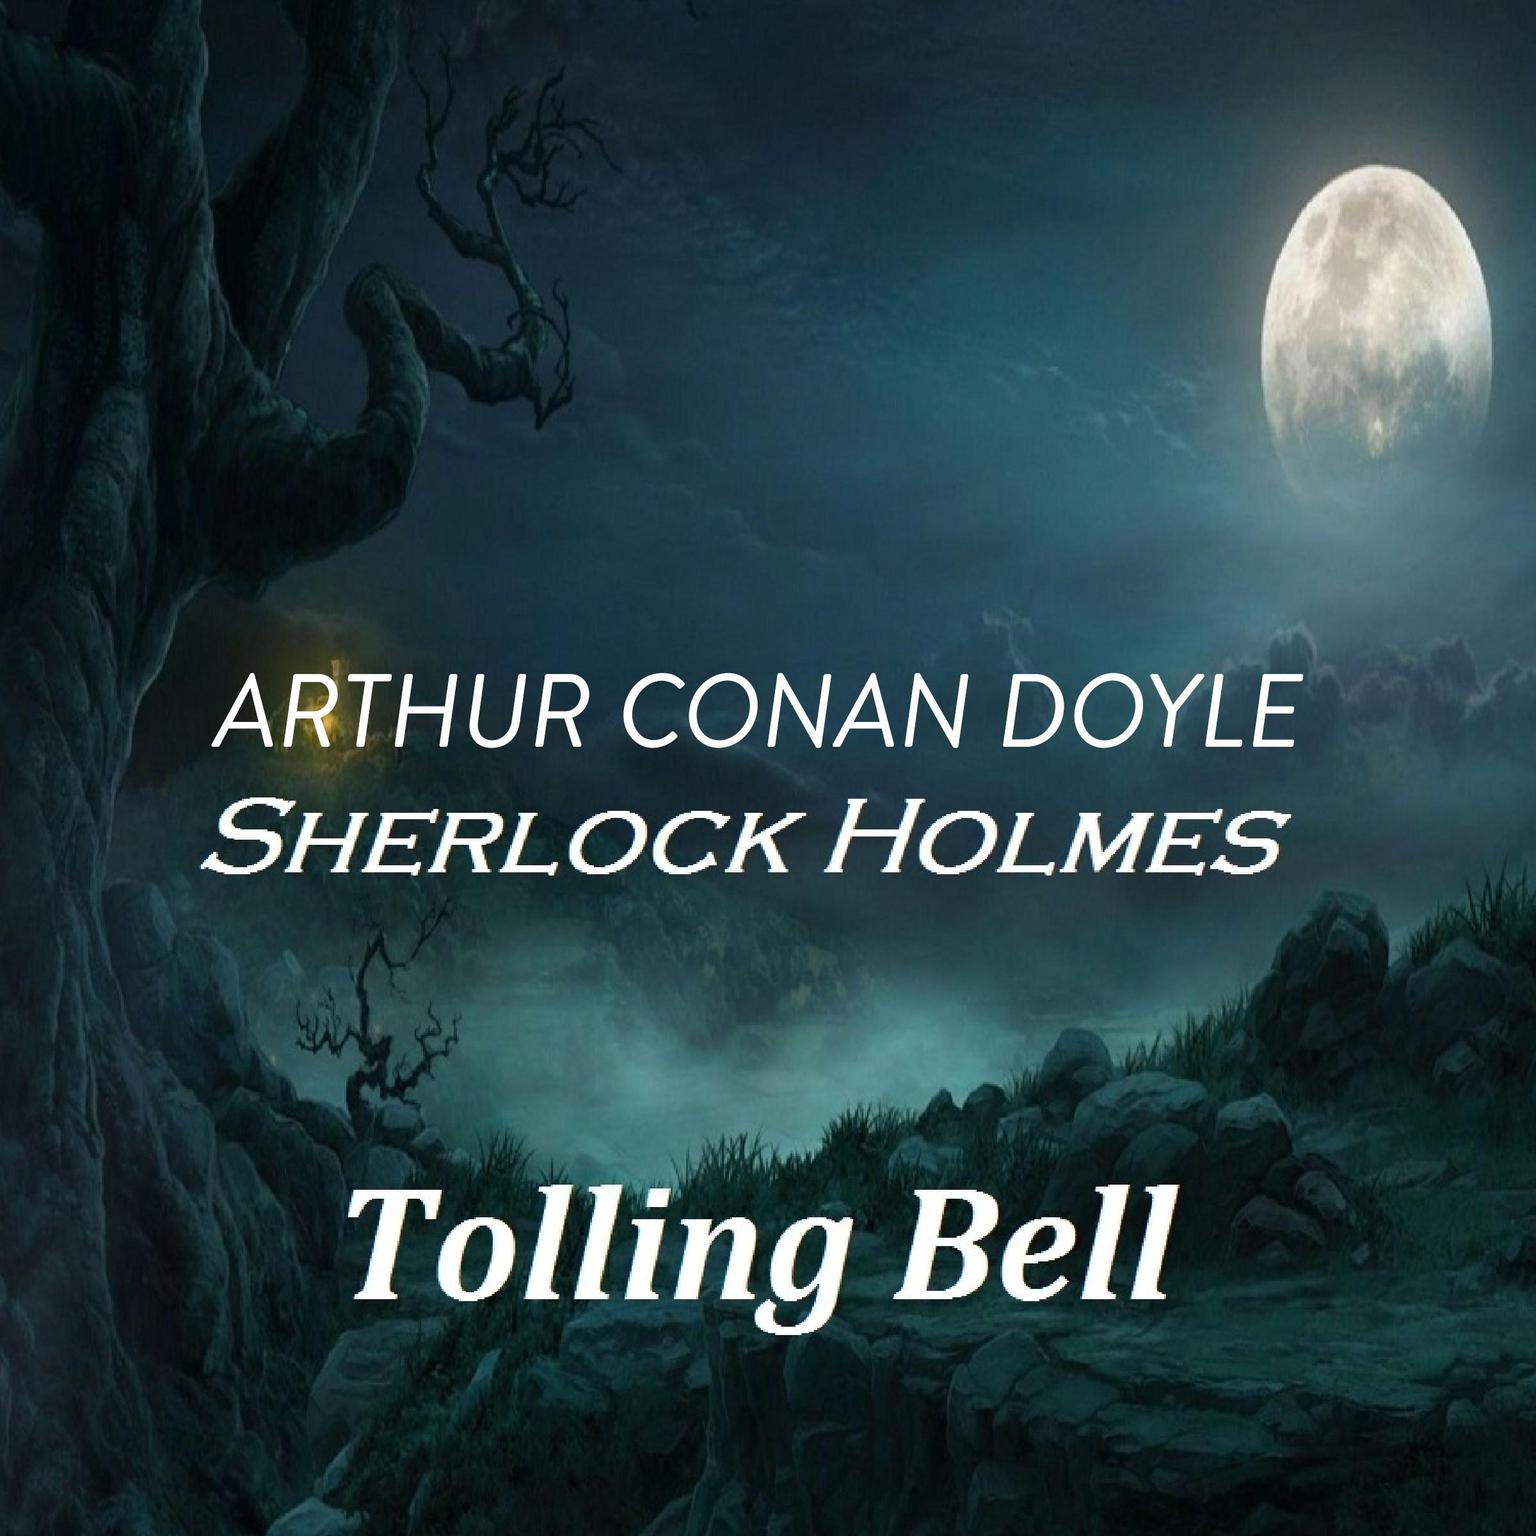 Arthur Conan Doyle  Sherlock Holmes  Tolling Bell Audiobook, by Arthur Conan Doyle